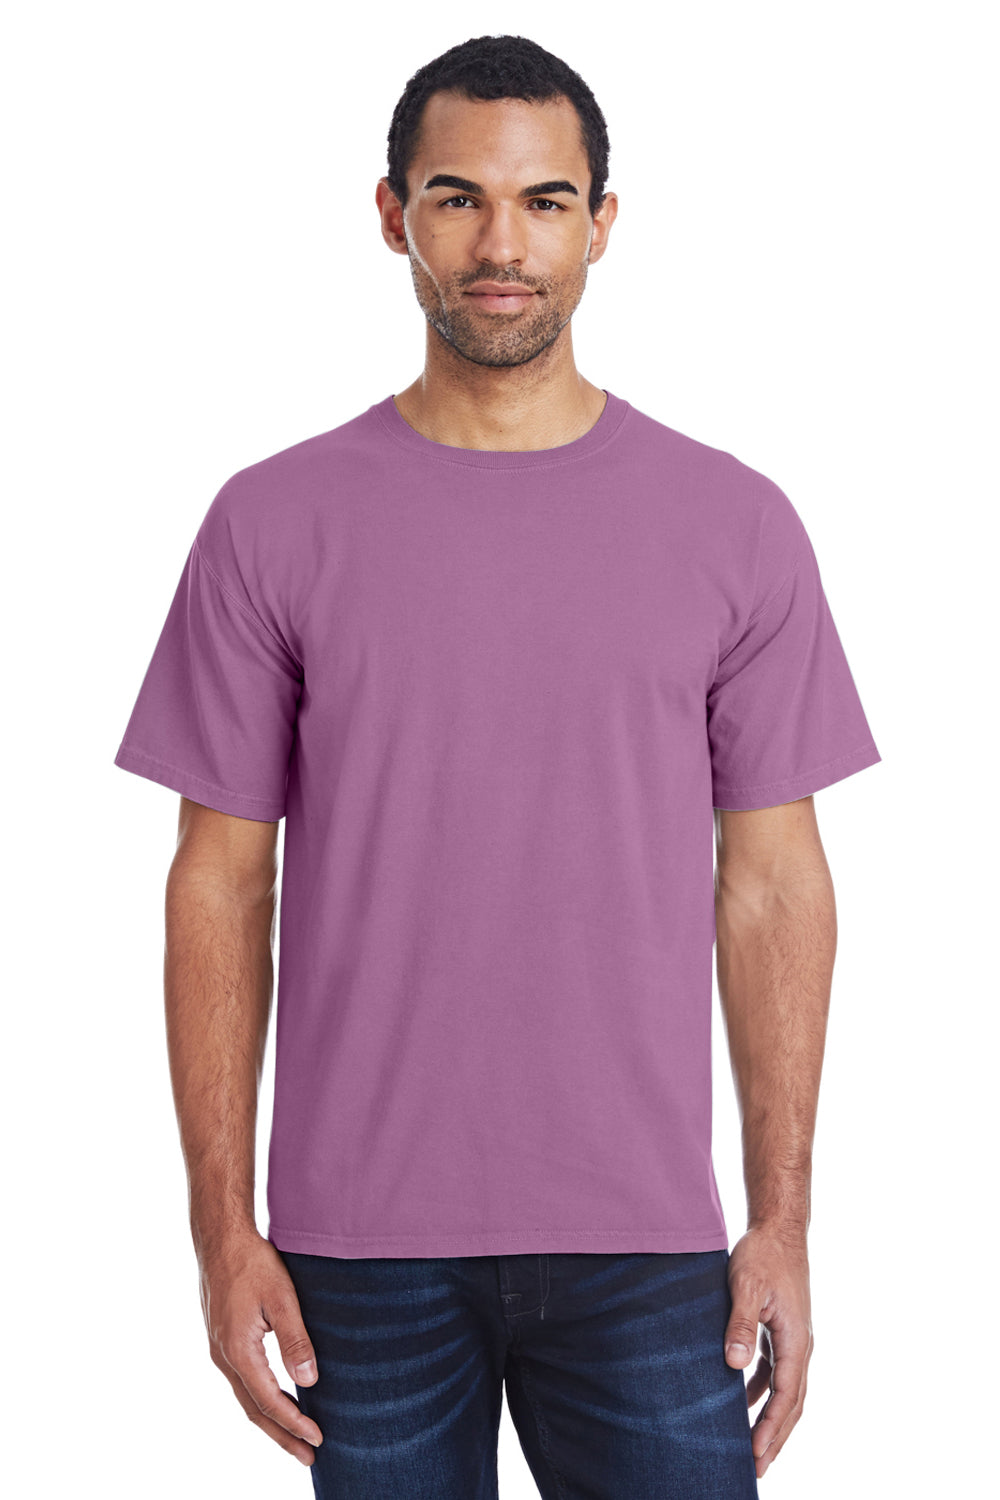 ComfortWash By Hanes GDH100 Mens Short Sleeve Crewneck T-Shirt Plum Purple Front